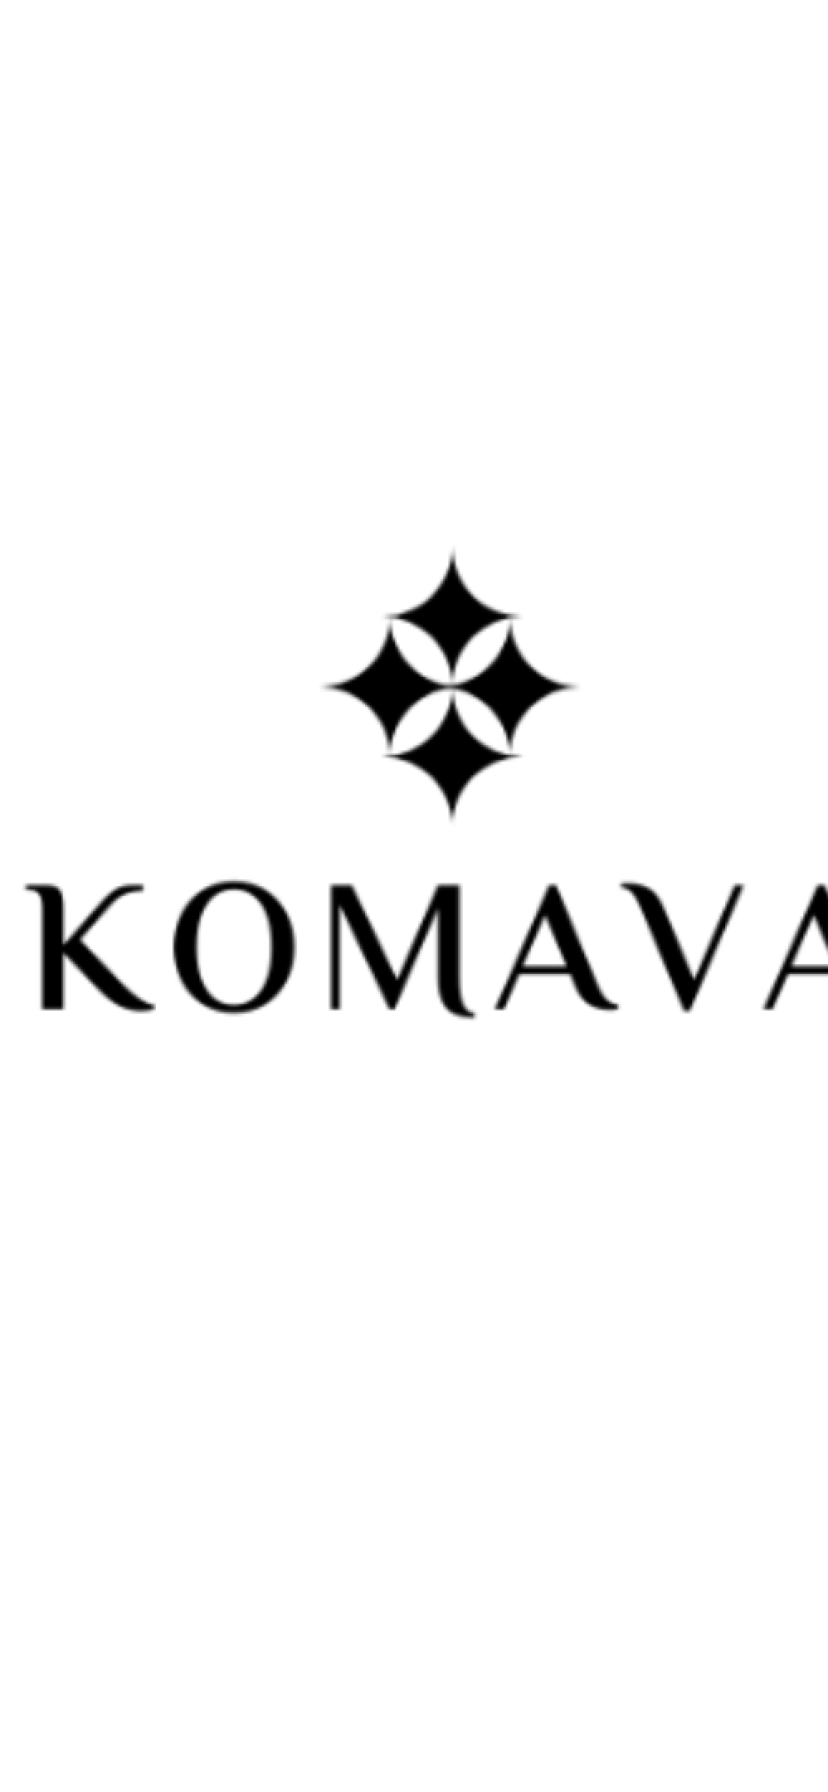 komava.com domain name for Sale